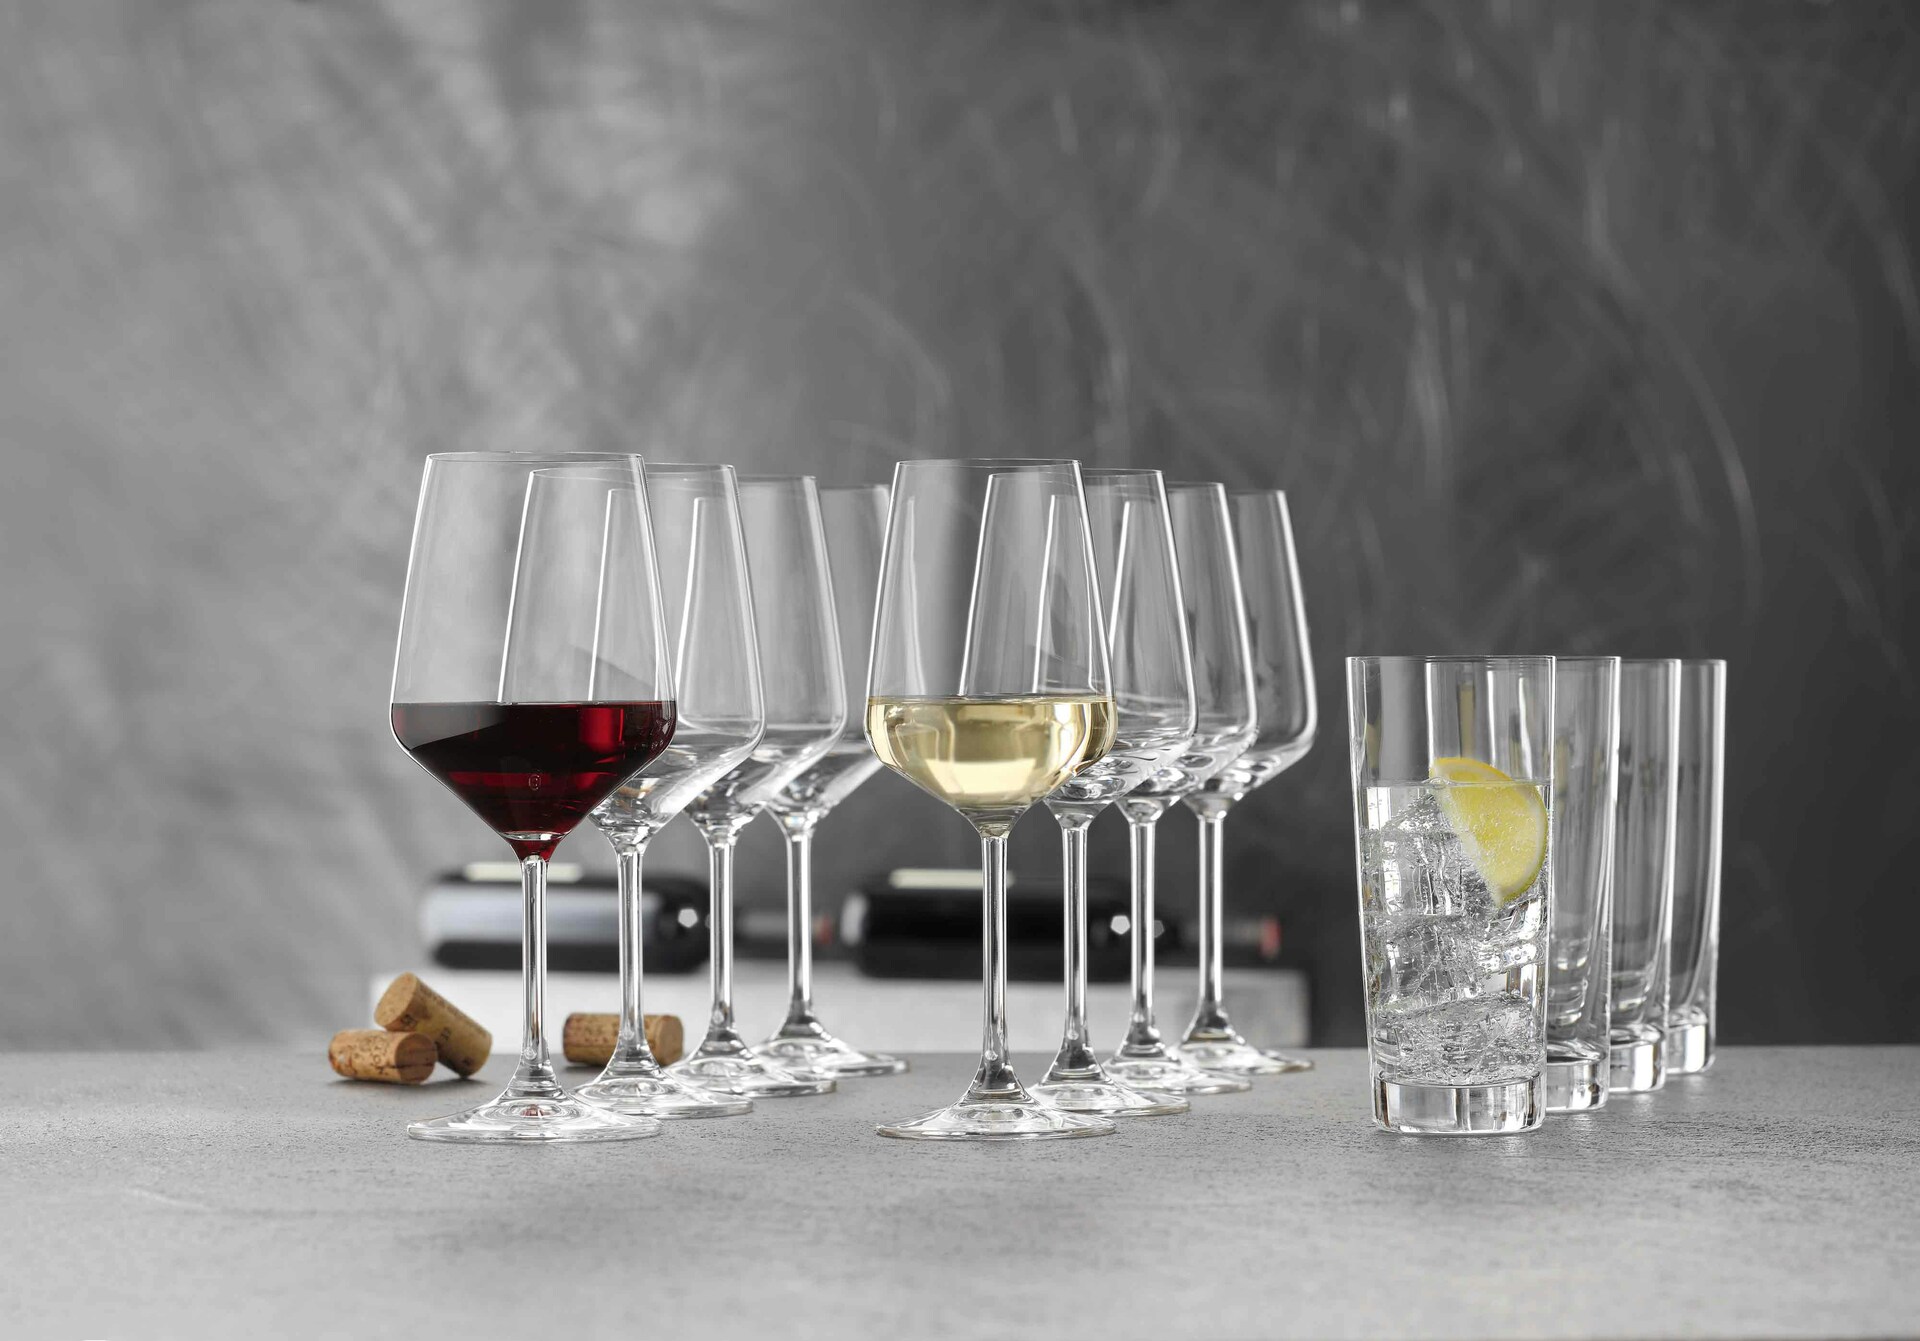 Salute Red Wine Glass Set Of 4, 55 cl - Spiegelau @ RoyalDesign